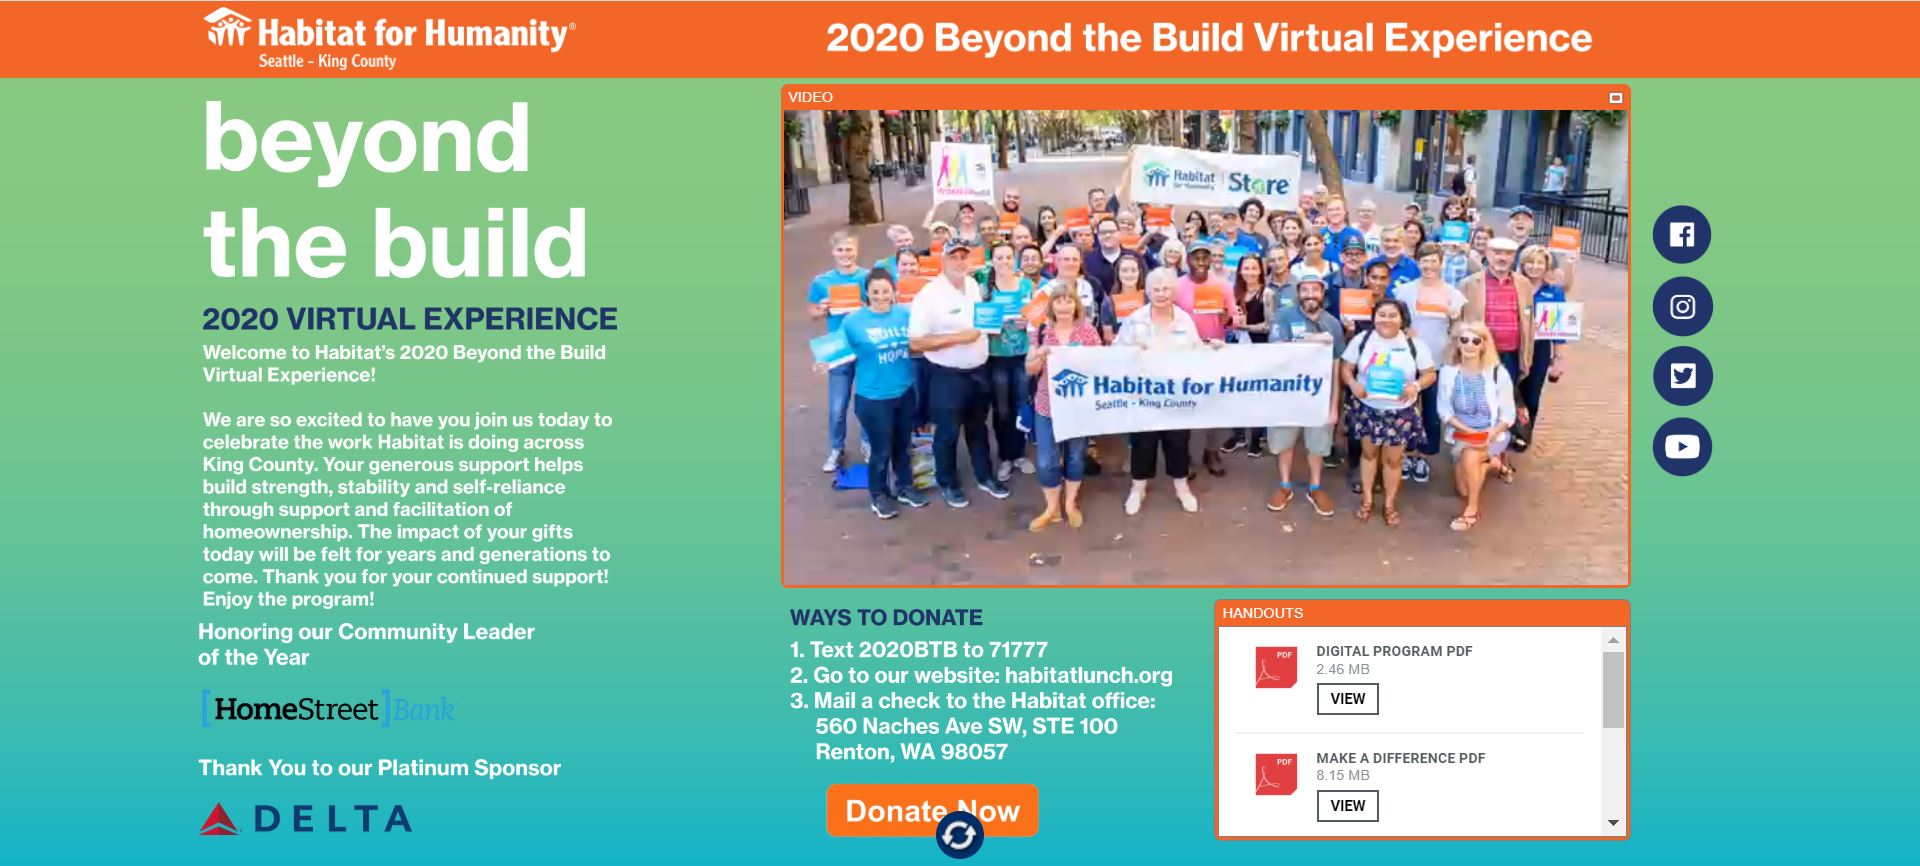 Habitat for Humanity’s $1.6 Million Virtual Fundraiser